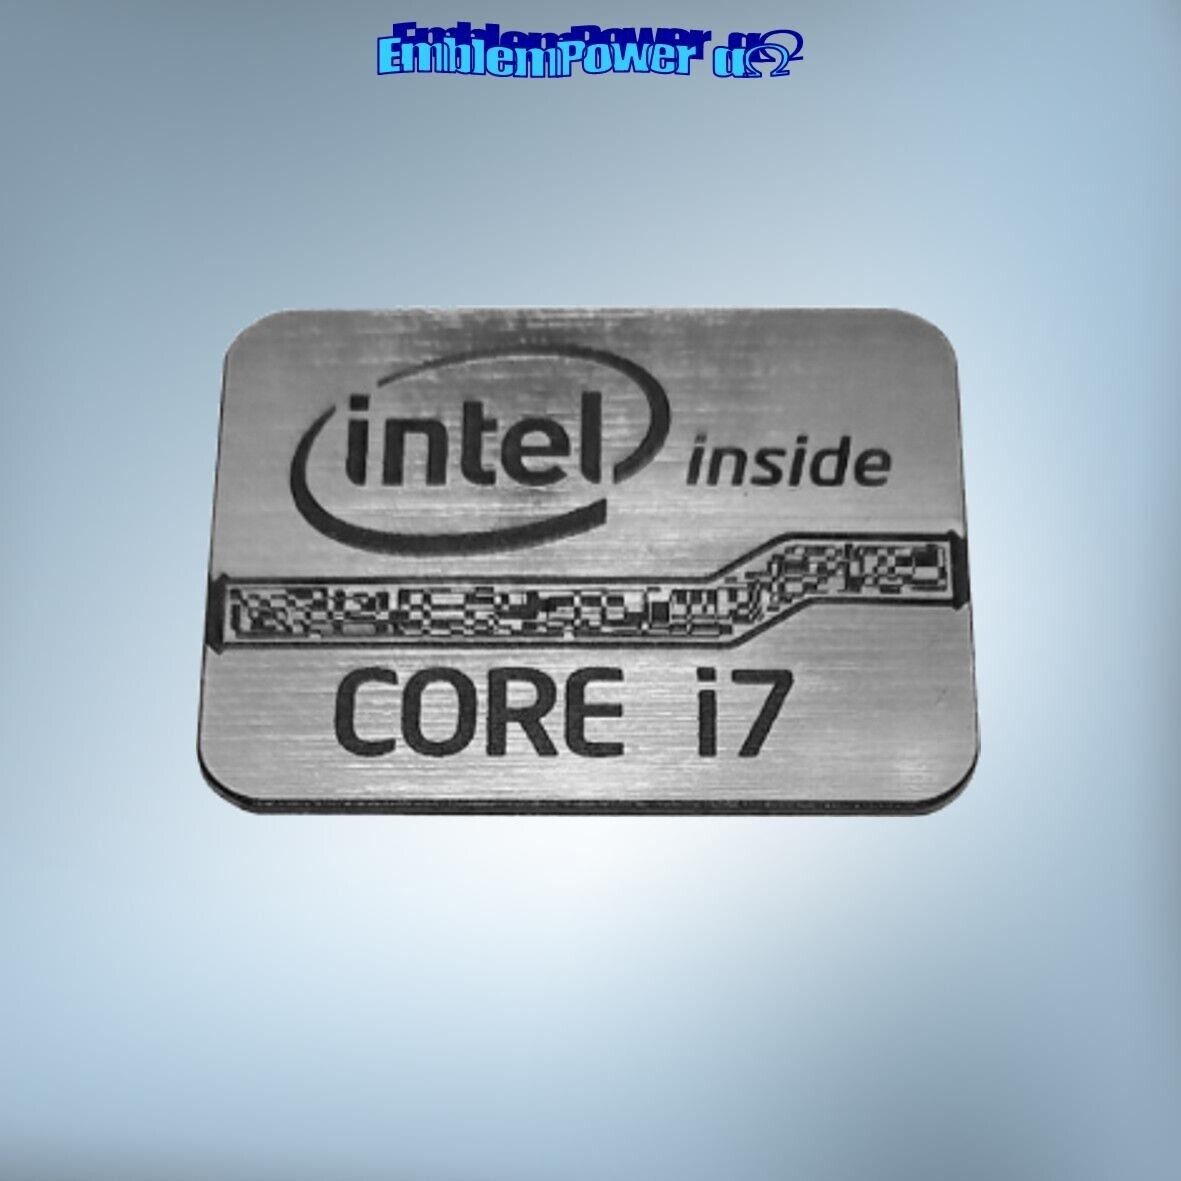 Intel Core i7 limited 21x16mm Emblem brushed Logo Sticker Badge Decal Aufkleber